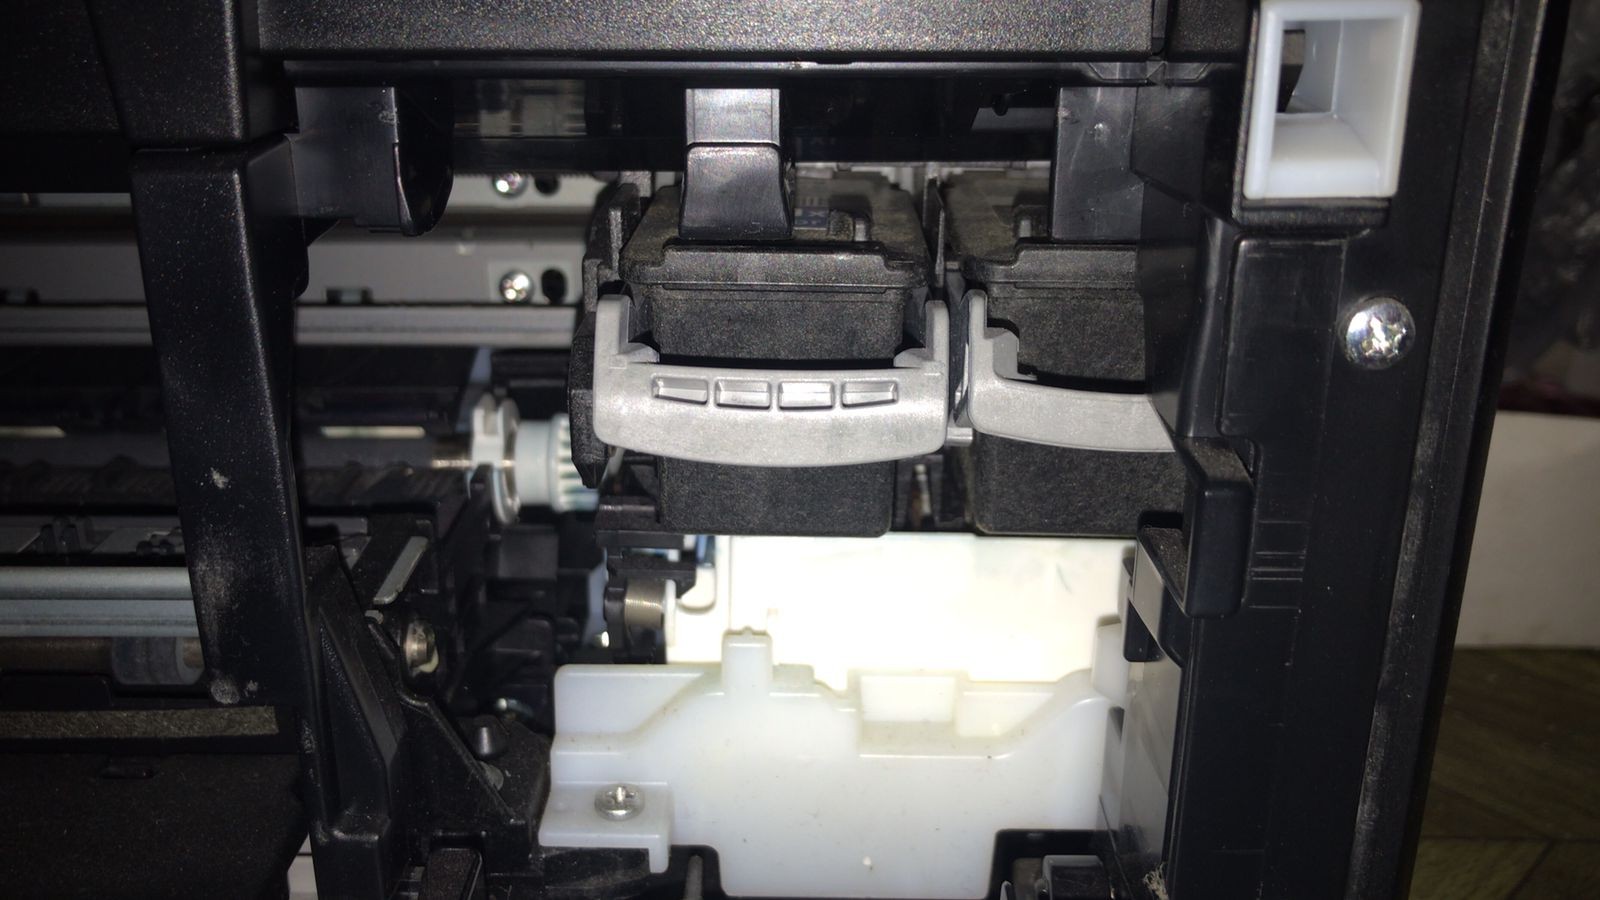 impresoras y scanners - impresora multifuncioal printer marca canon MG-3520